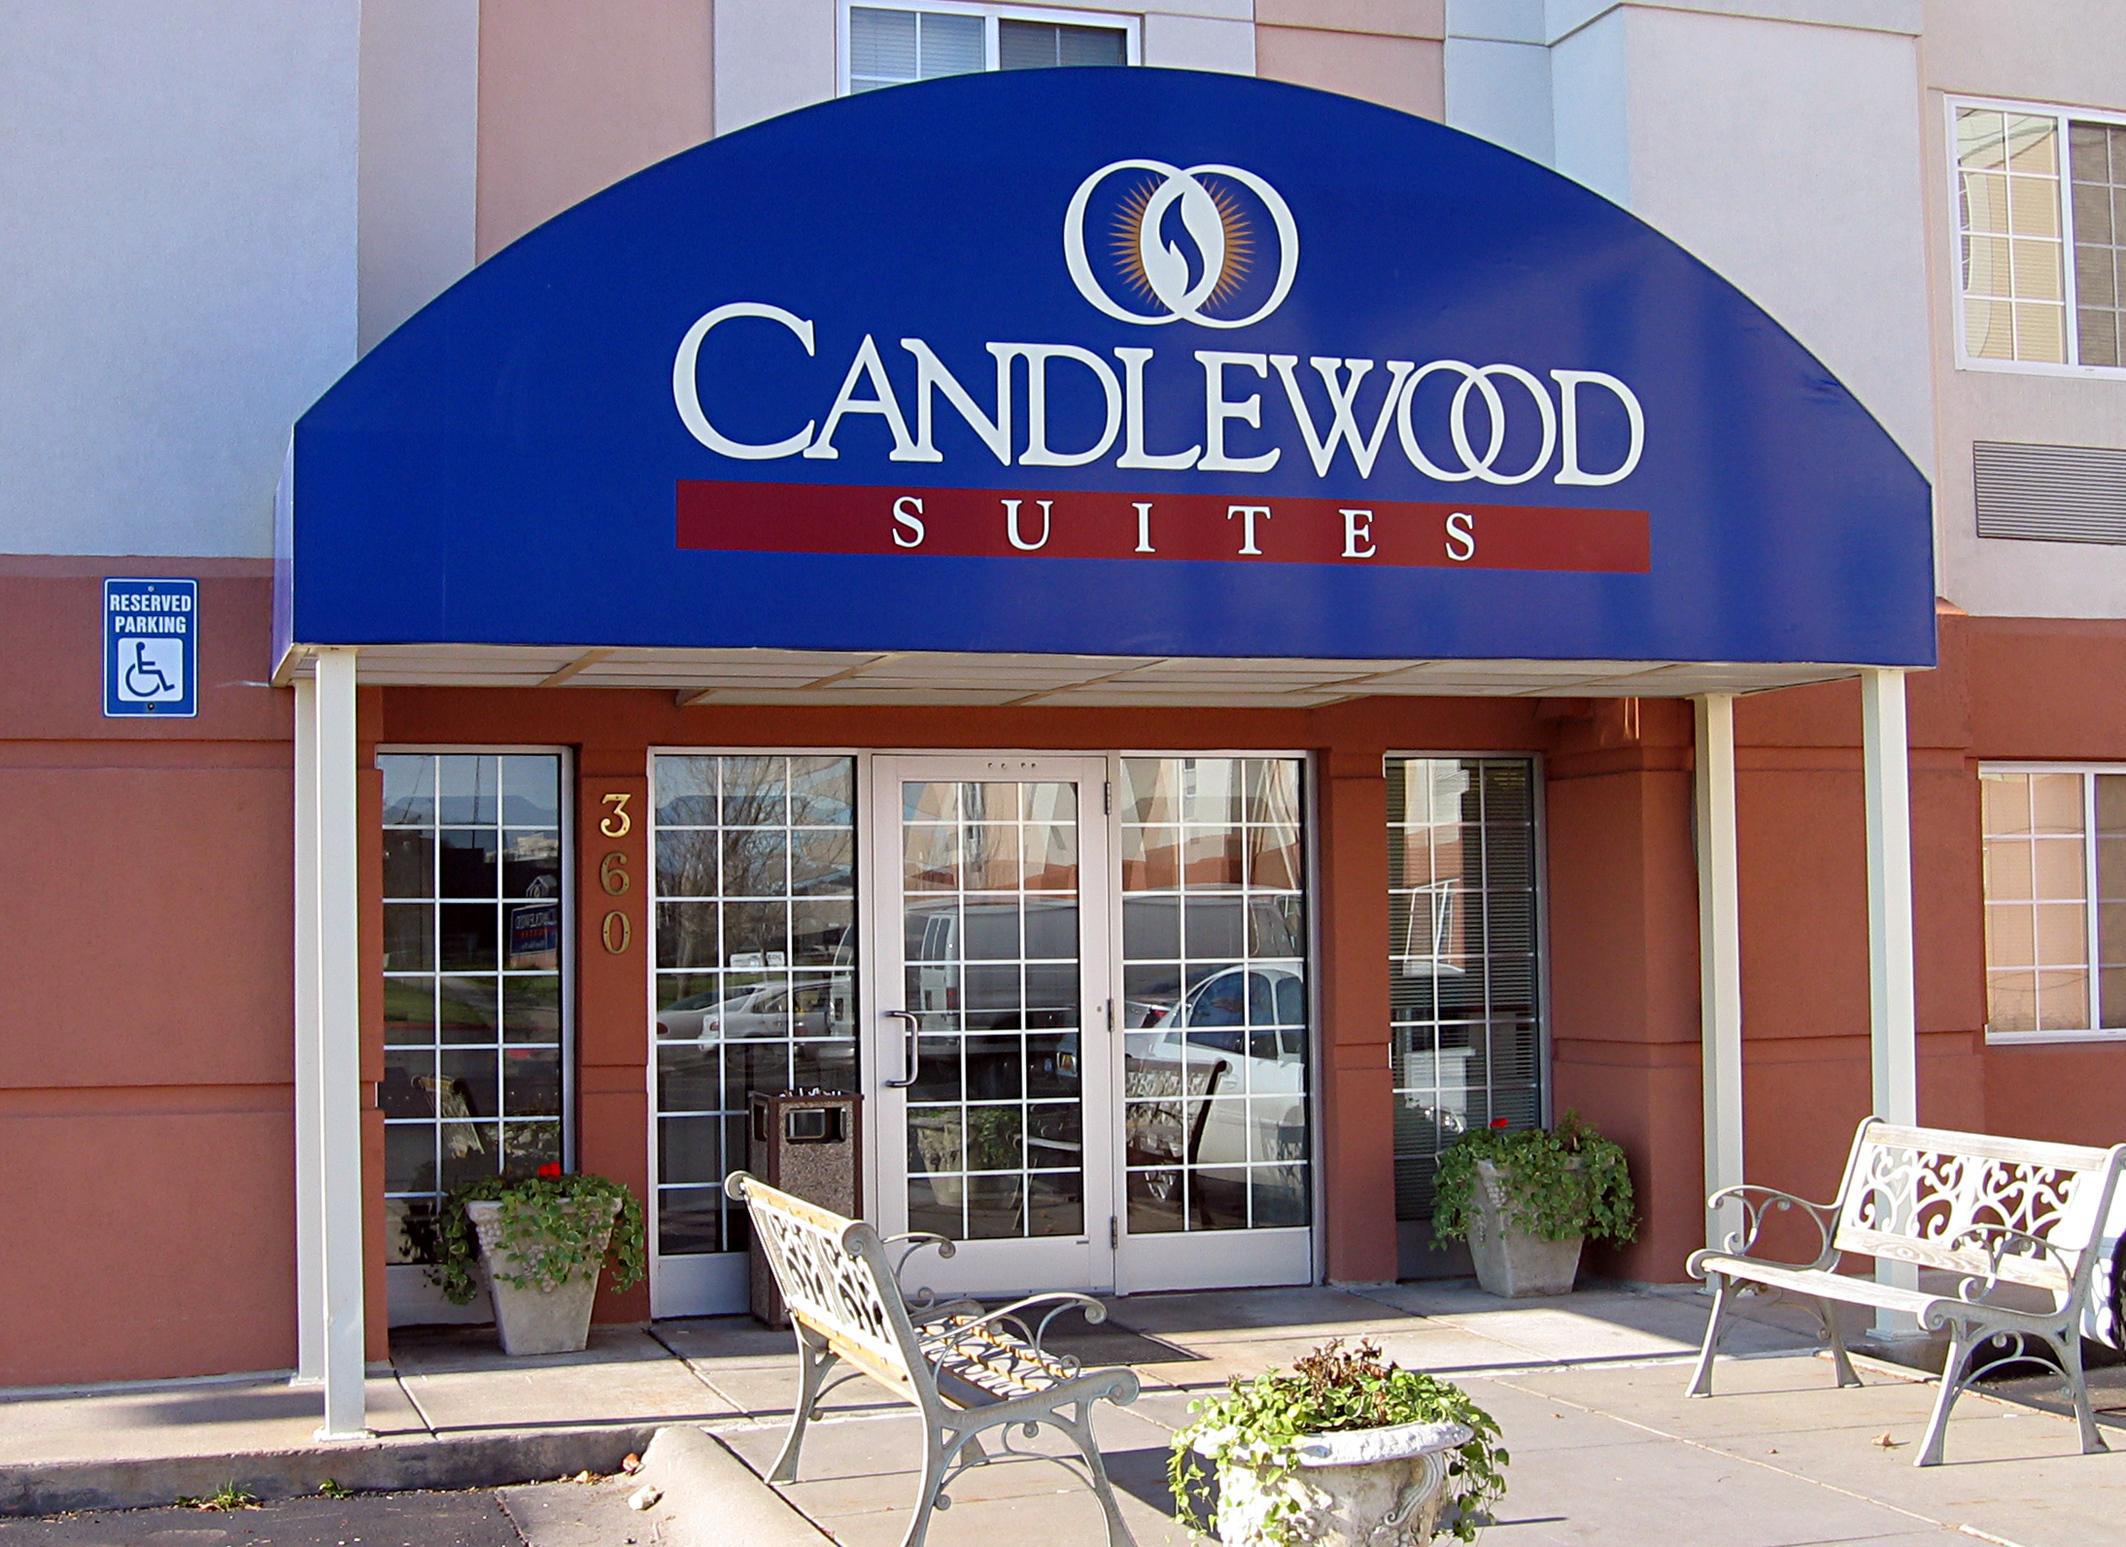 Photo of Candlewood Suites Omaha, Omaha, NE